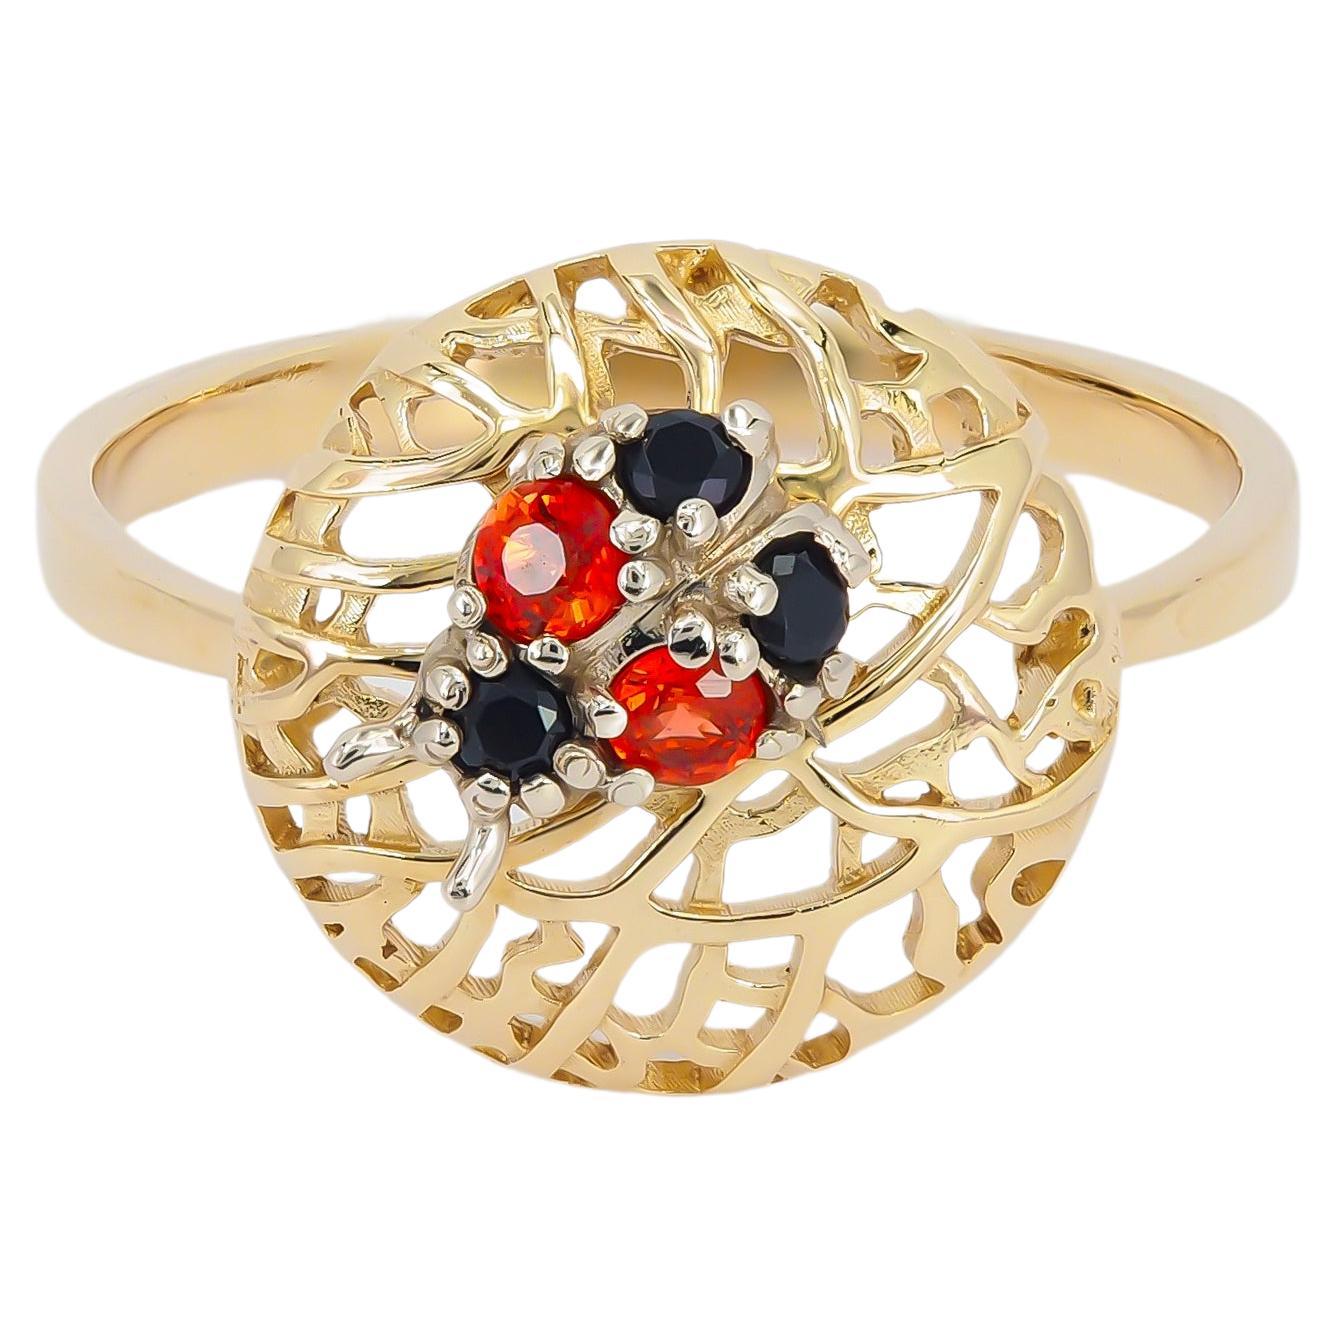 For Sale:  14 karat Gold Ring with Sapphires, Spinels. Ladybug gold Ring.